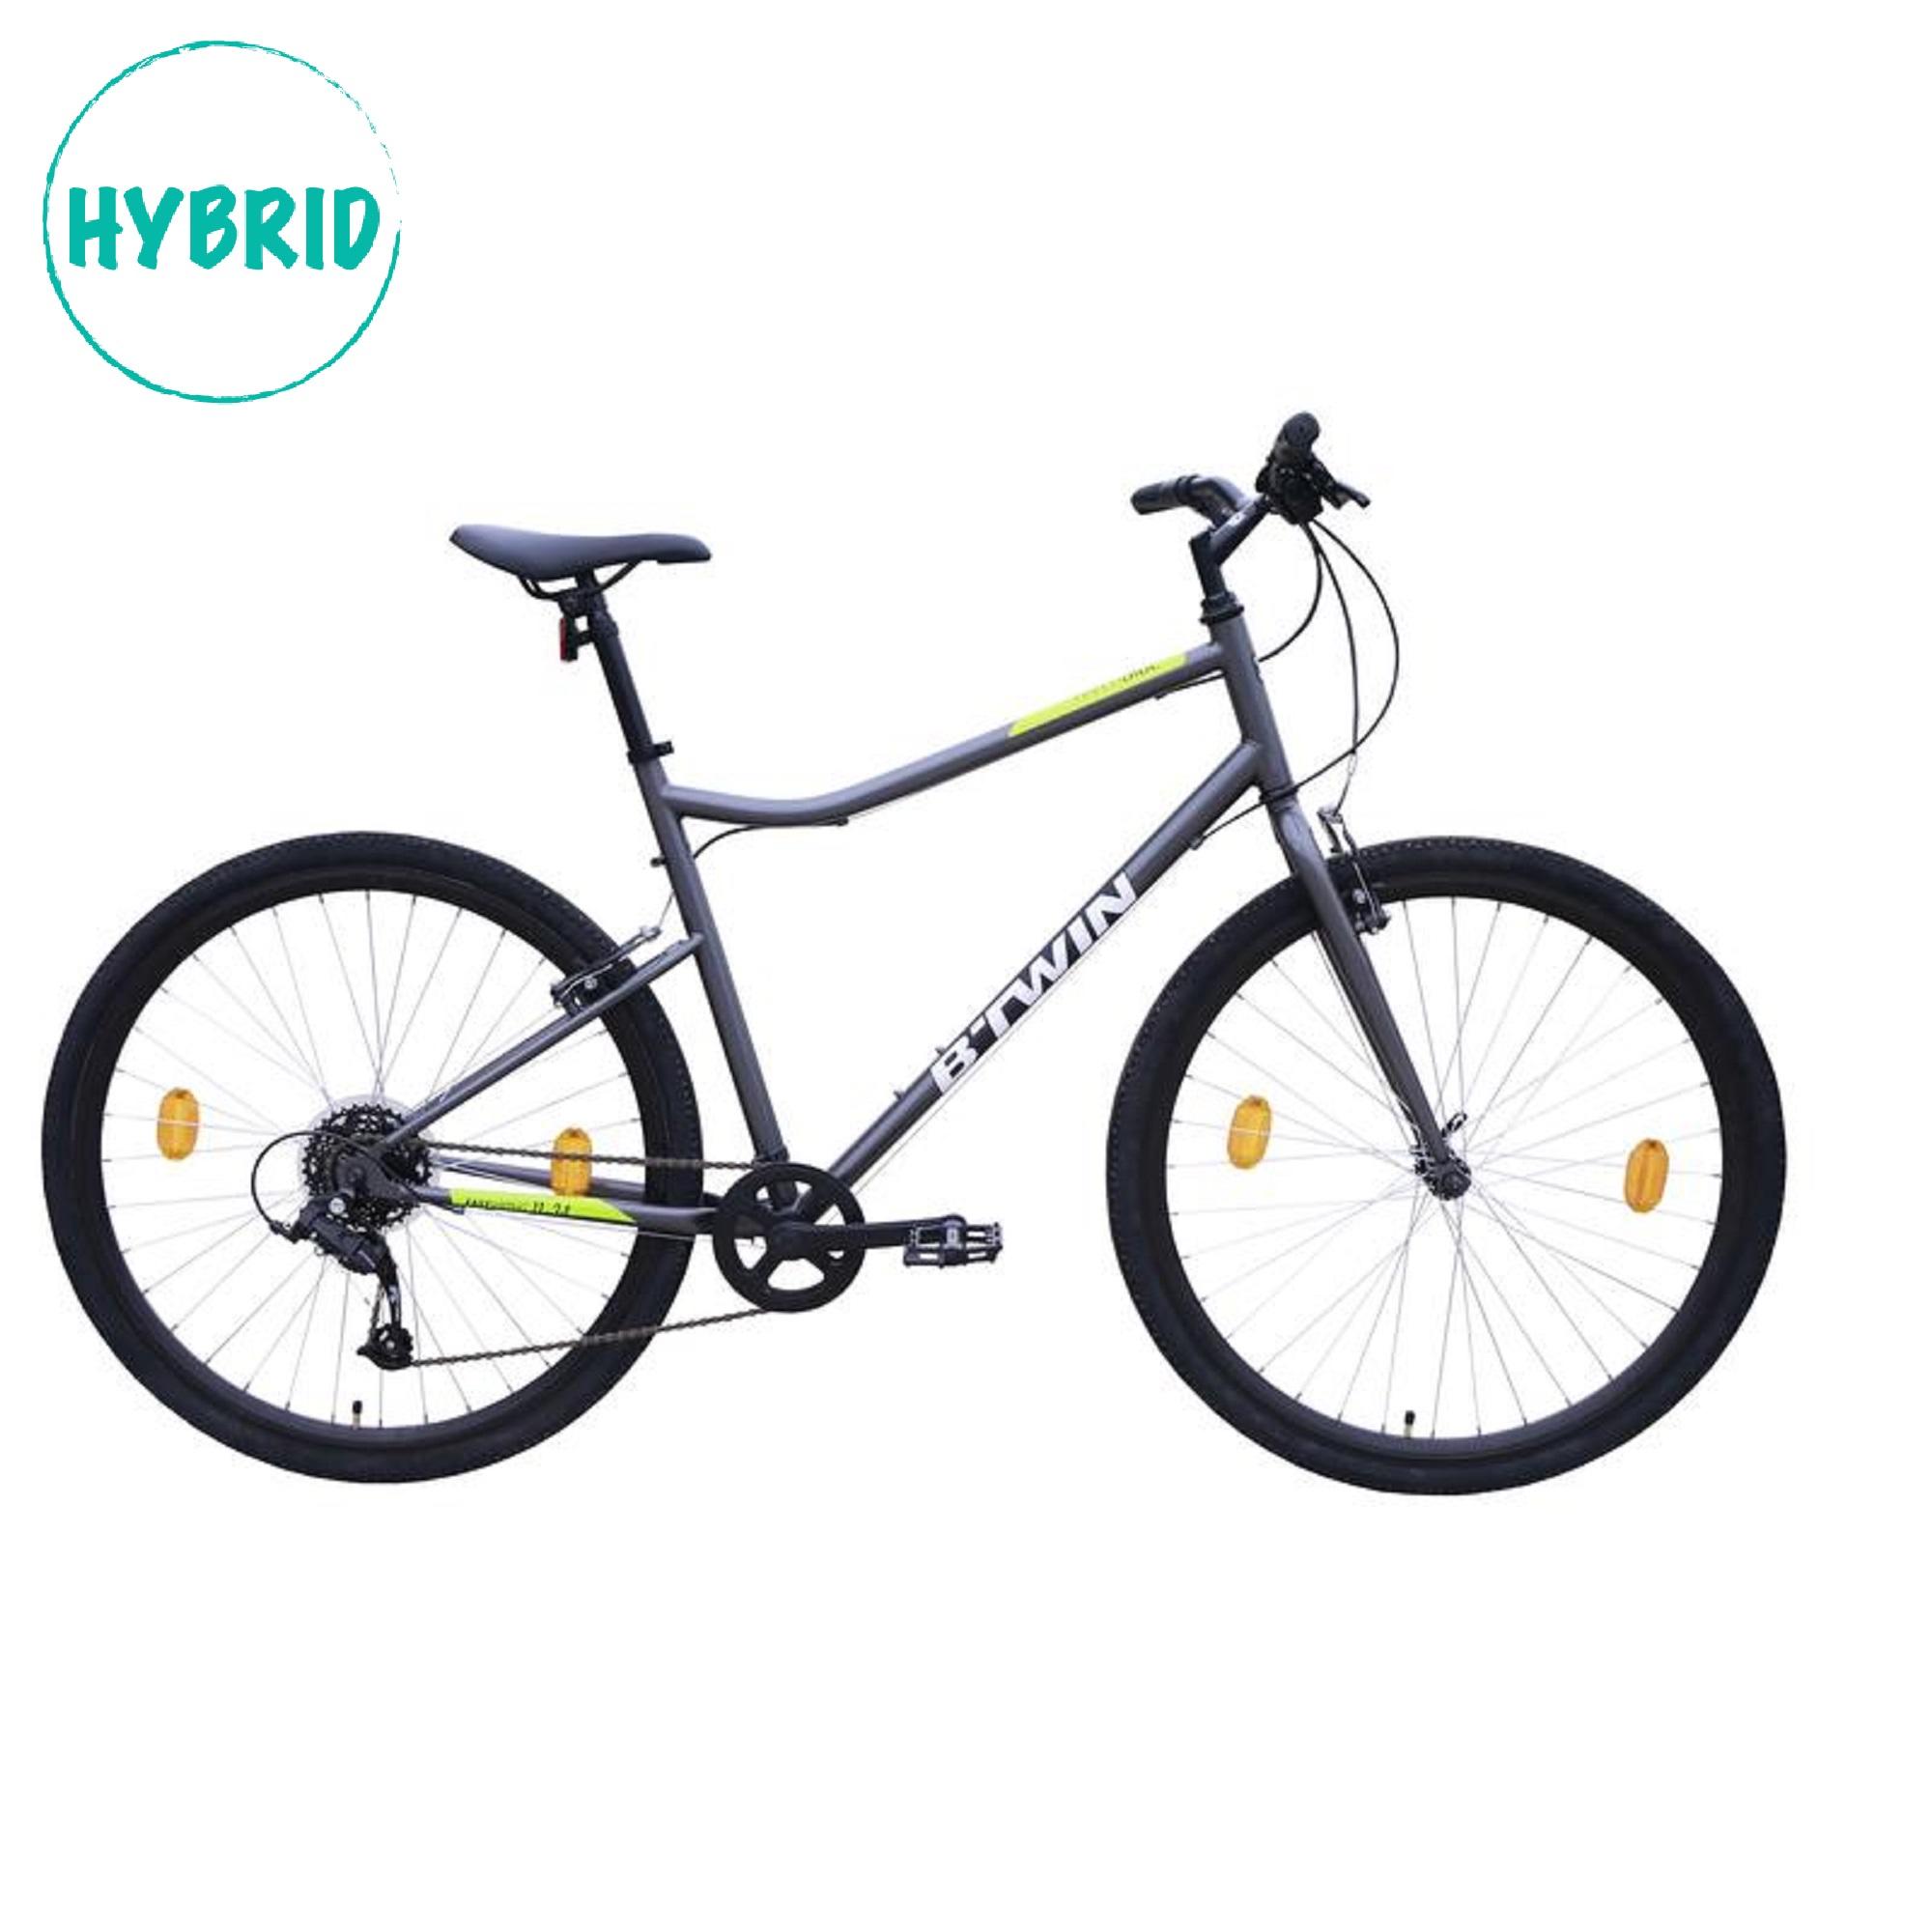 Hybrid cycle Riverside 120 Grey Yellow.